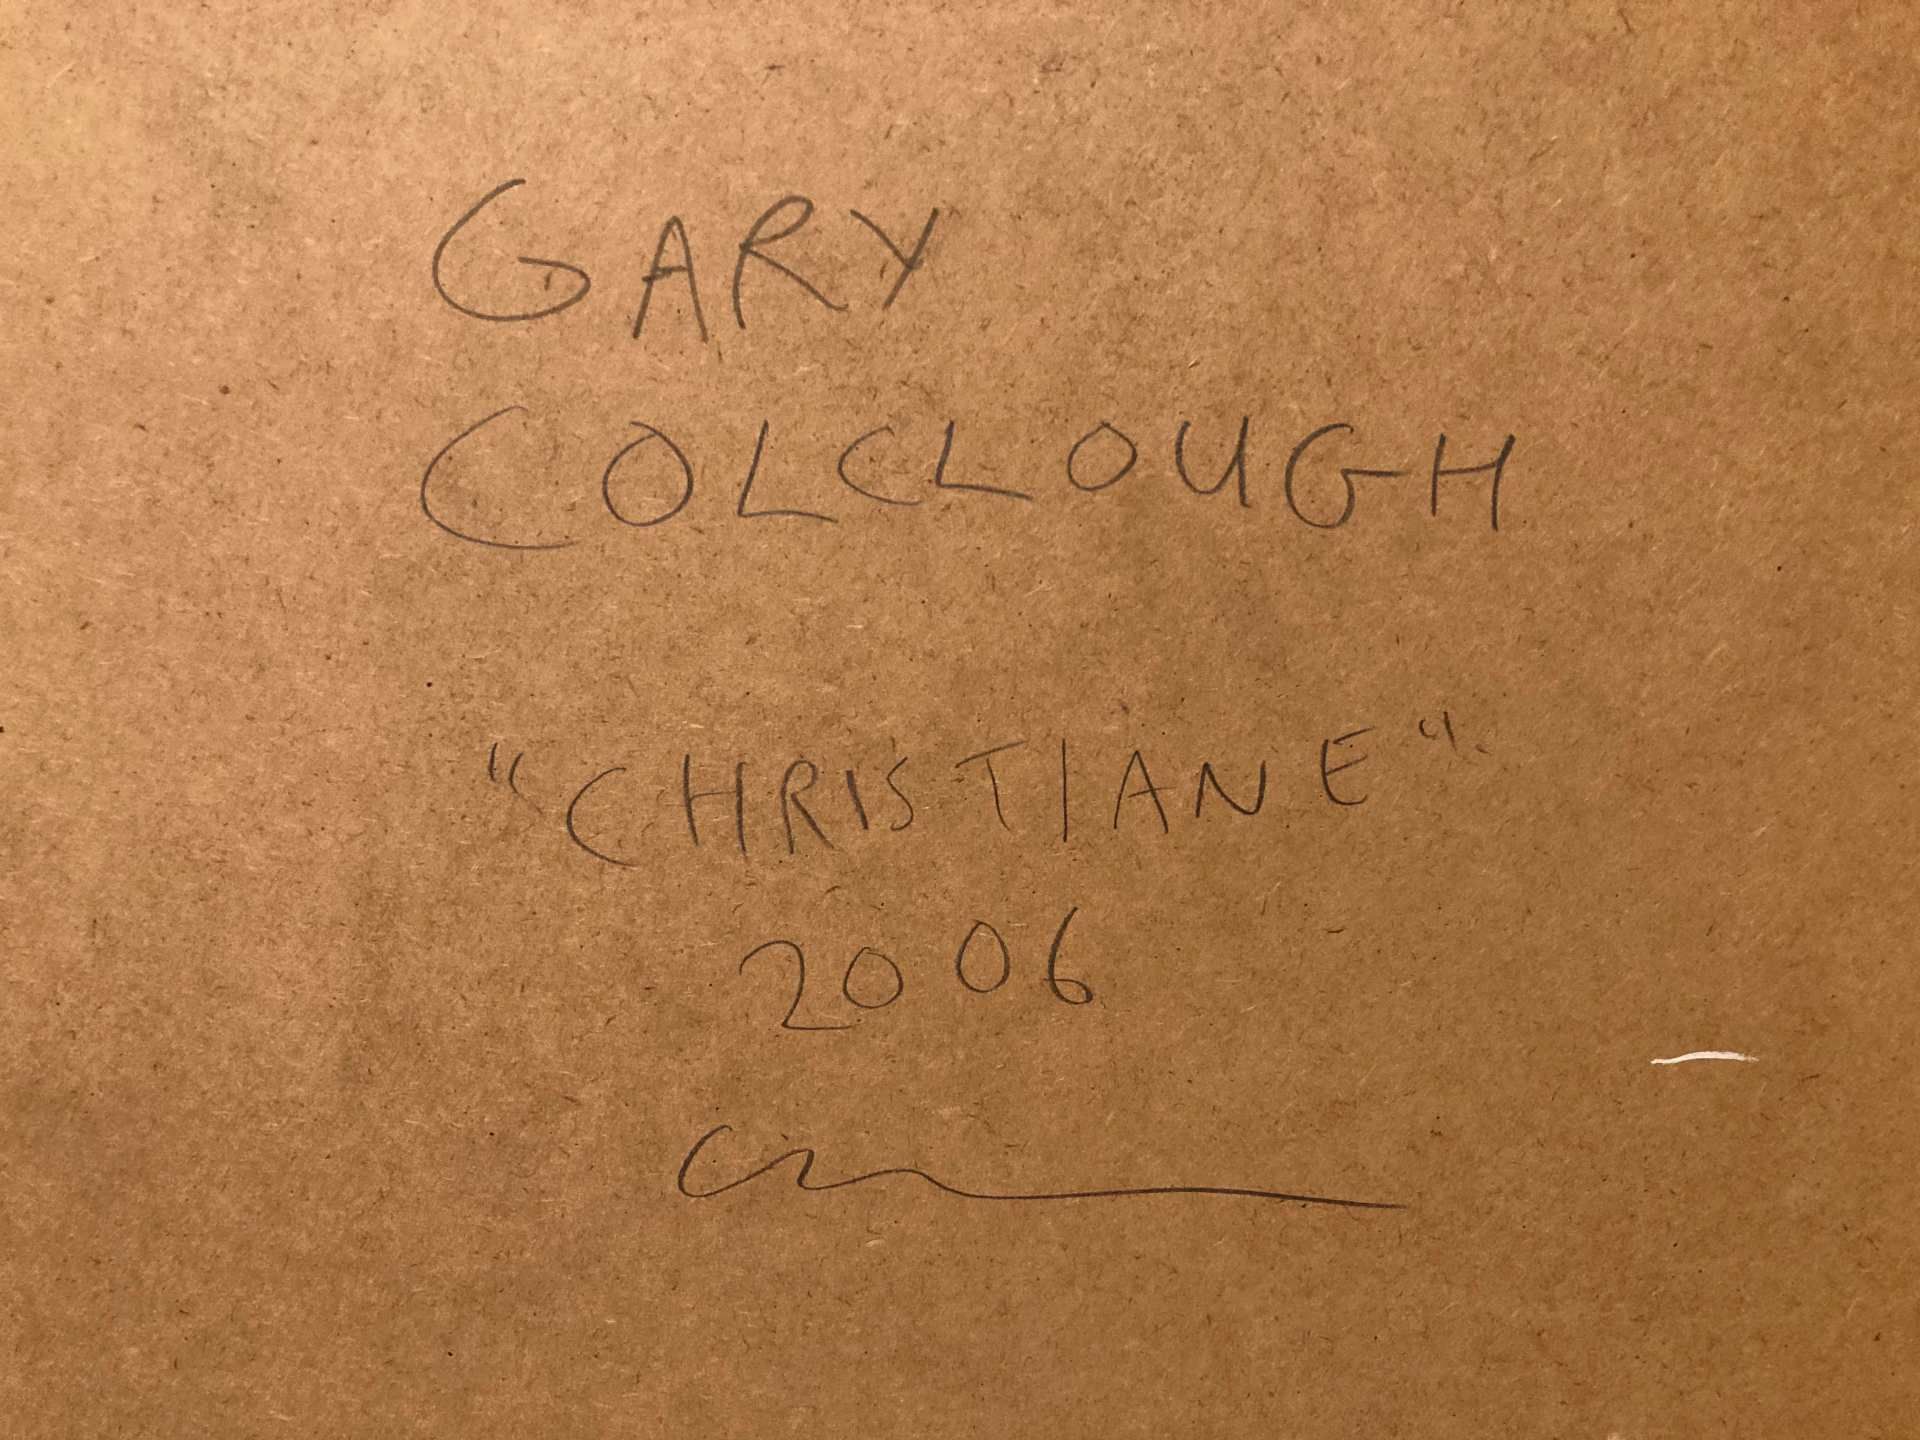 GARY COLCLOUGH (British Artist, b. 1977) - Bild 4 aus 5